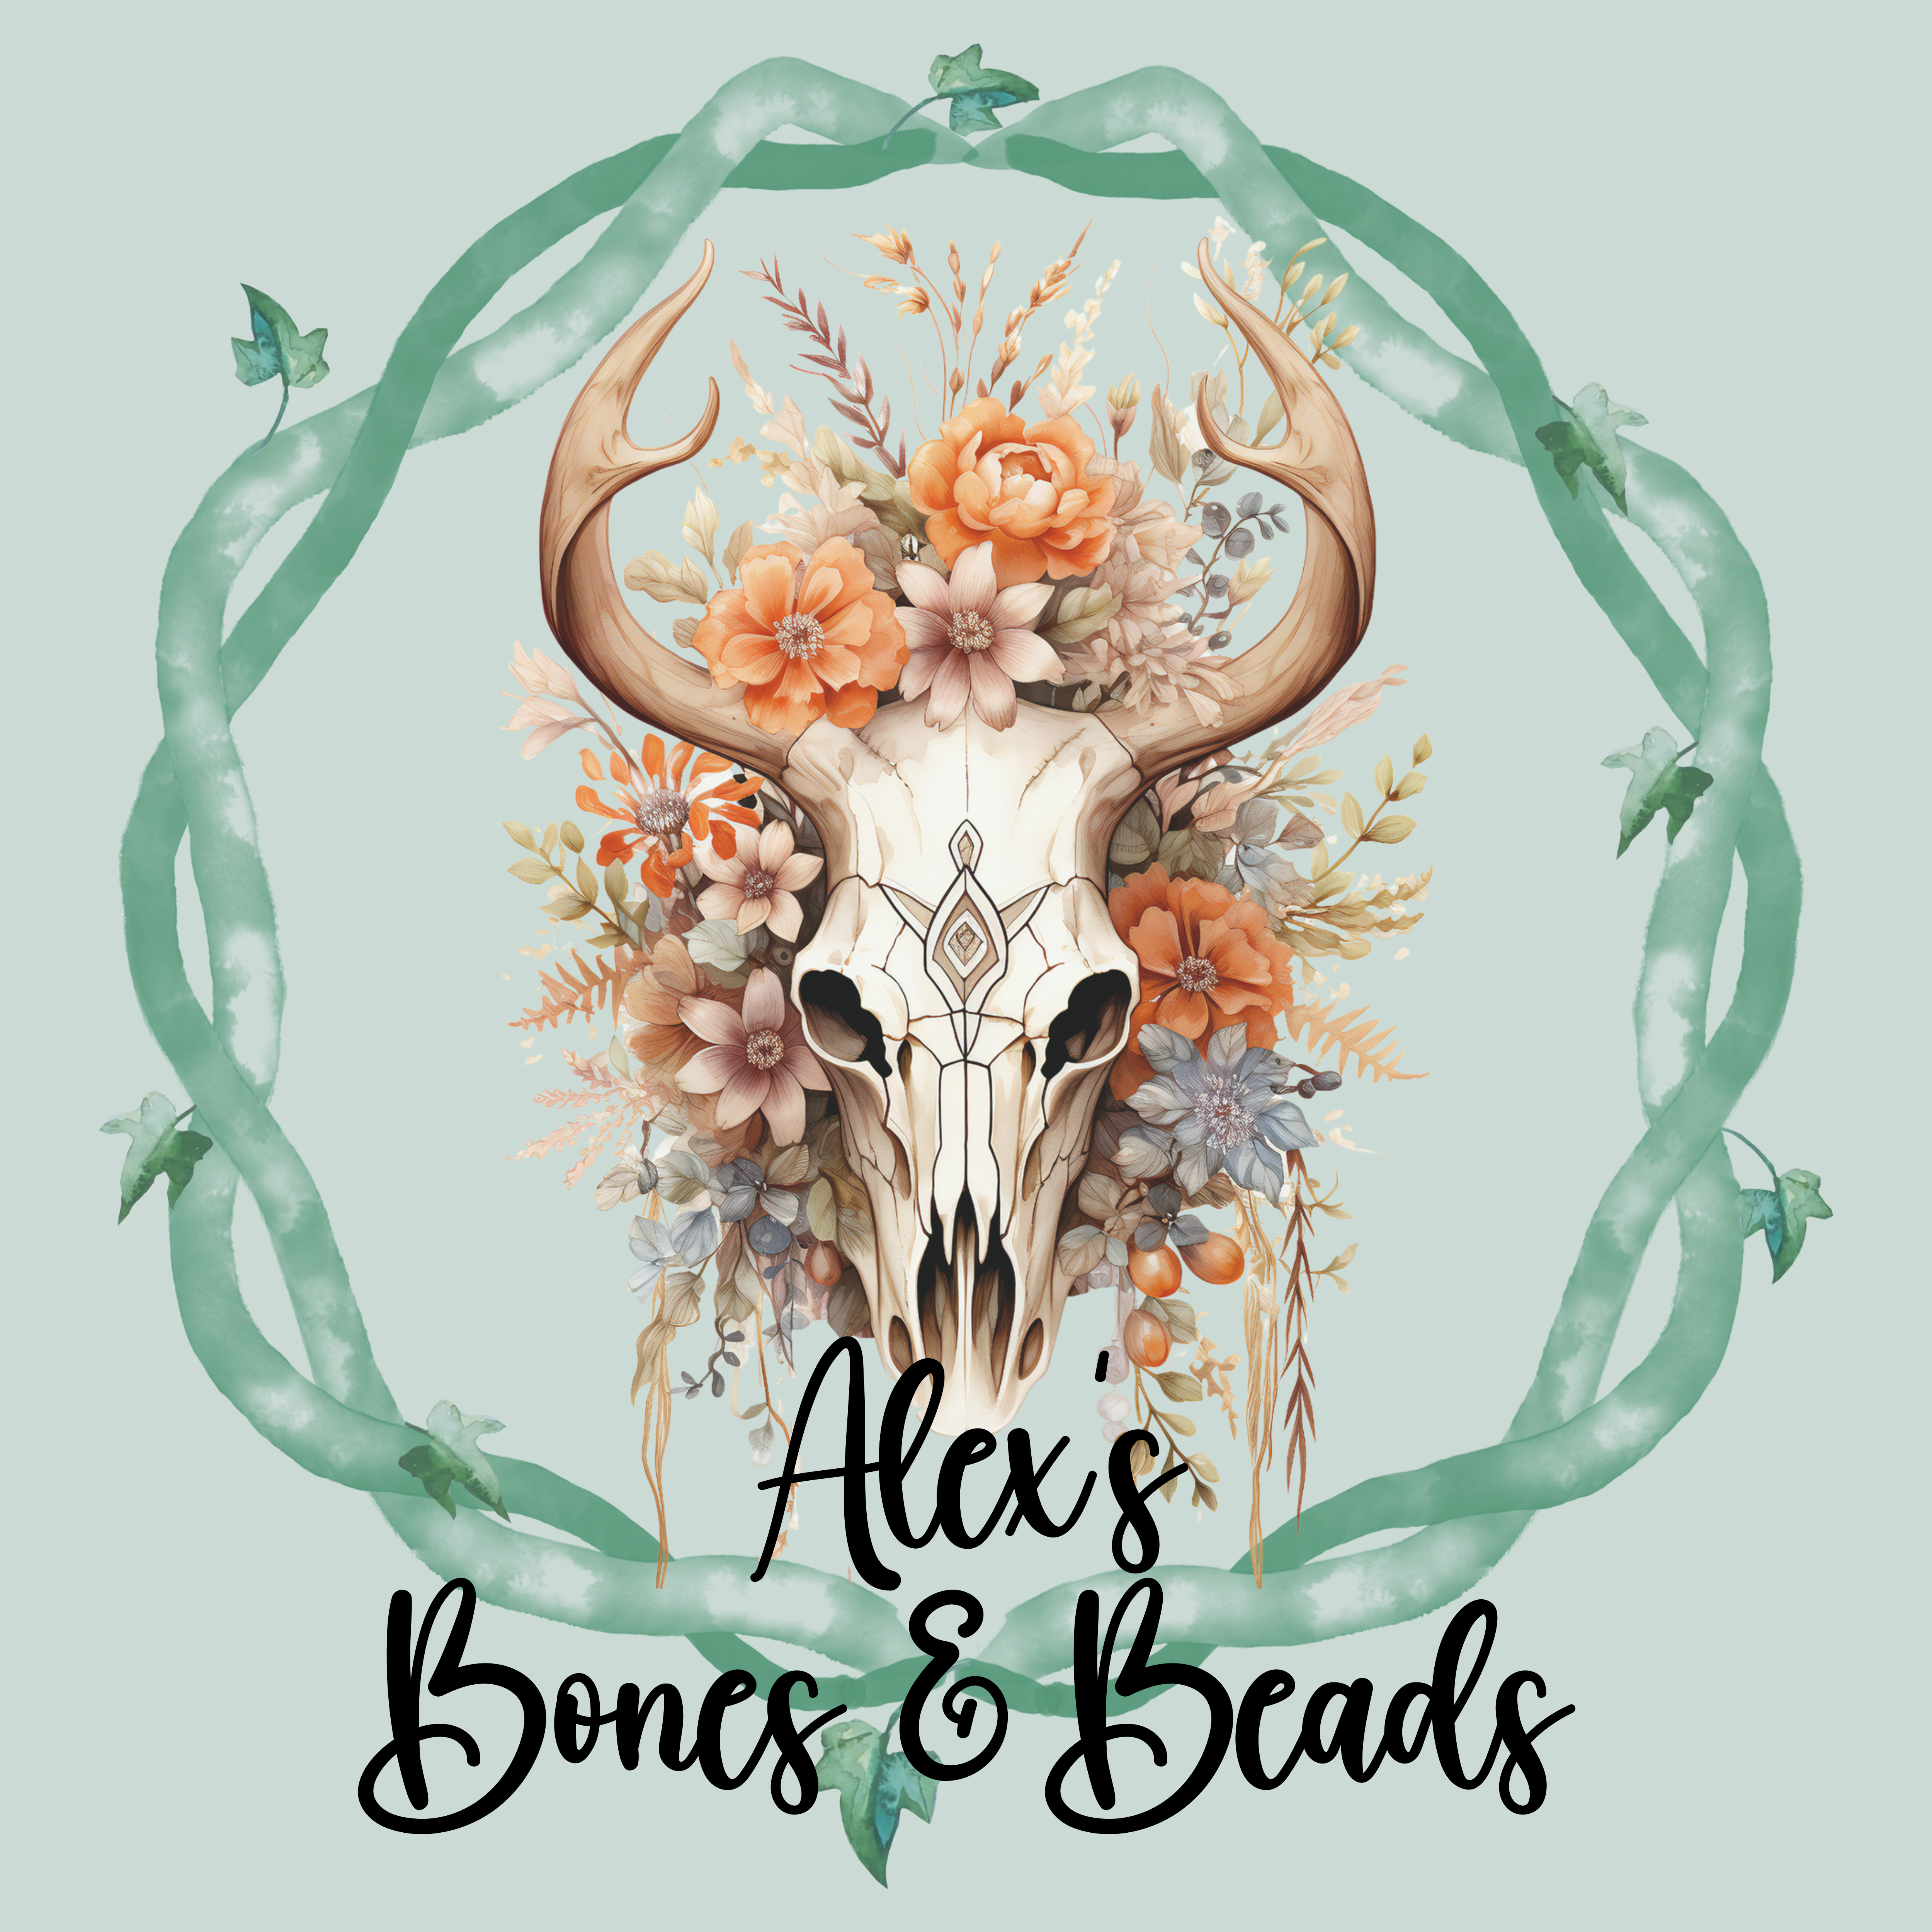 Alex's Bones & Beads